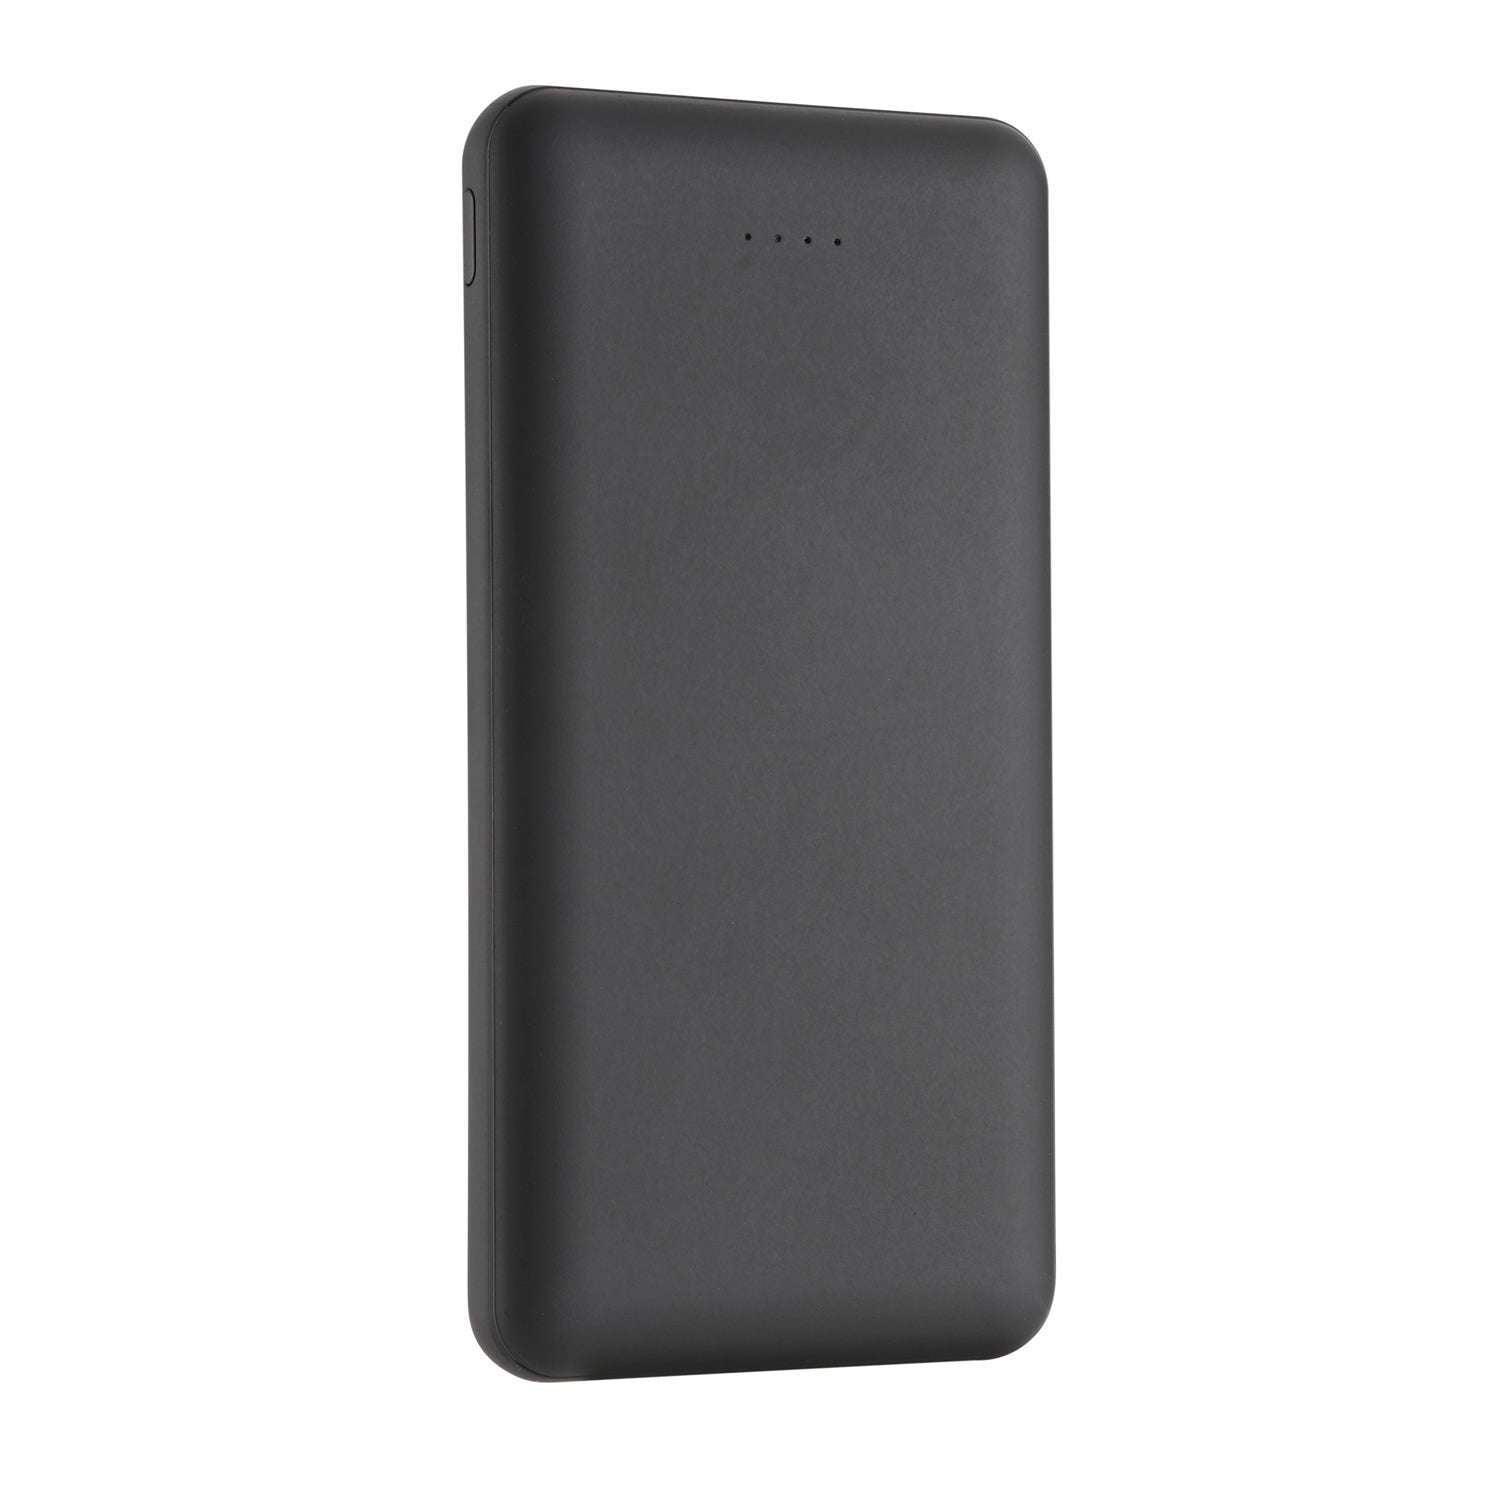 Xiaomi Mi Power Bank 2 10000mAh Black: full specifications, photo